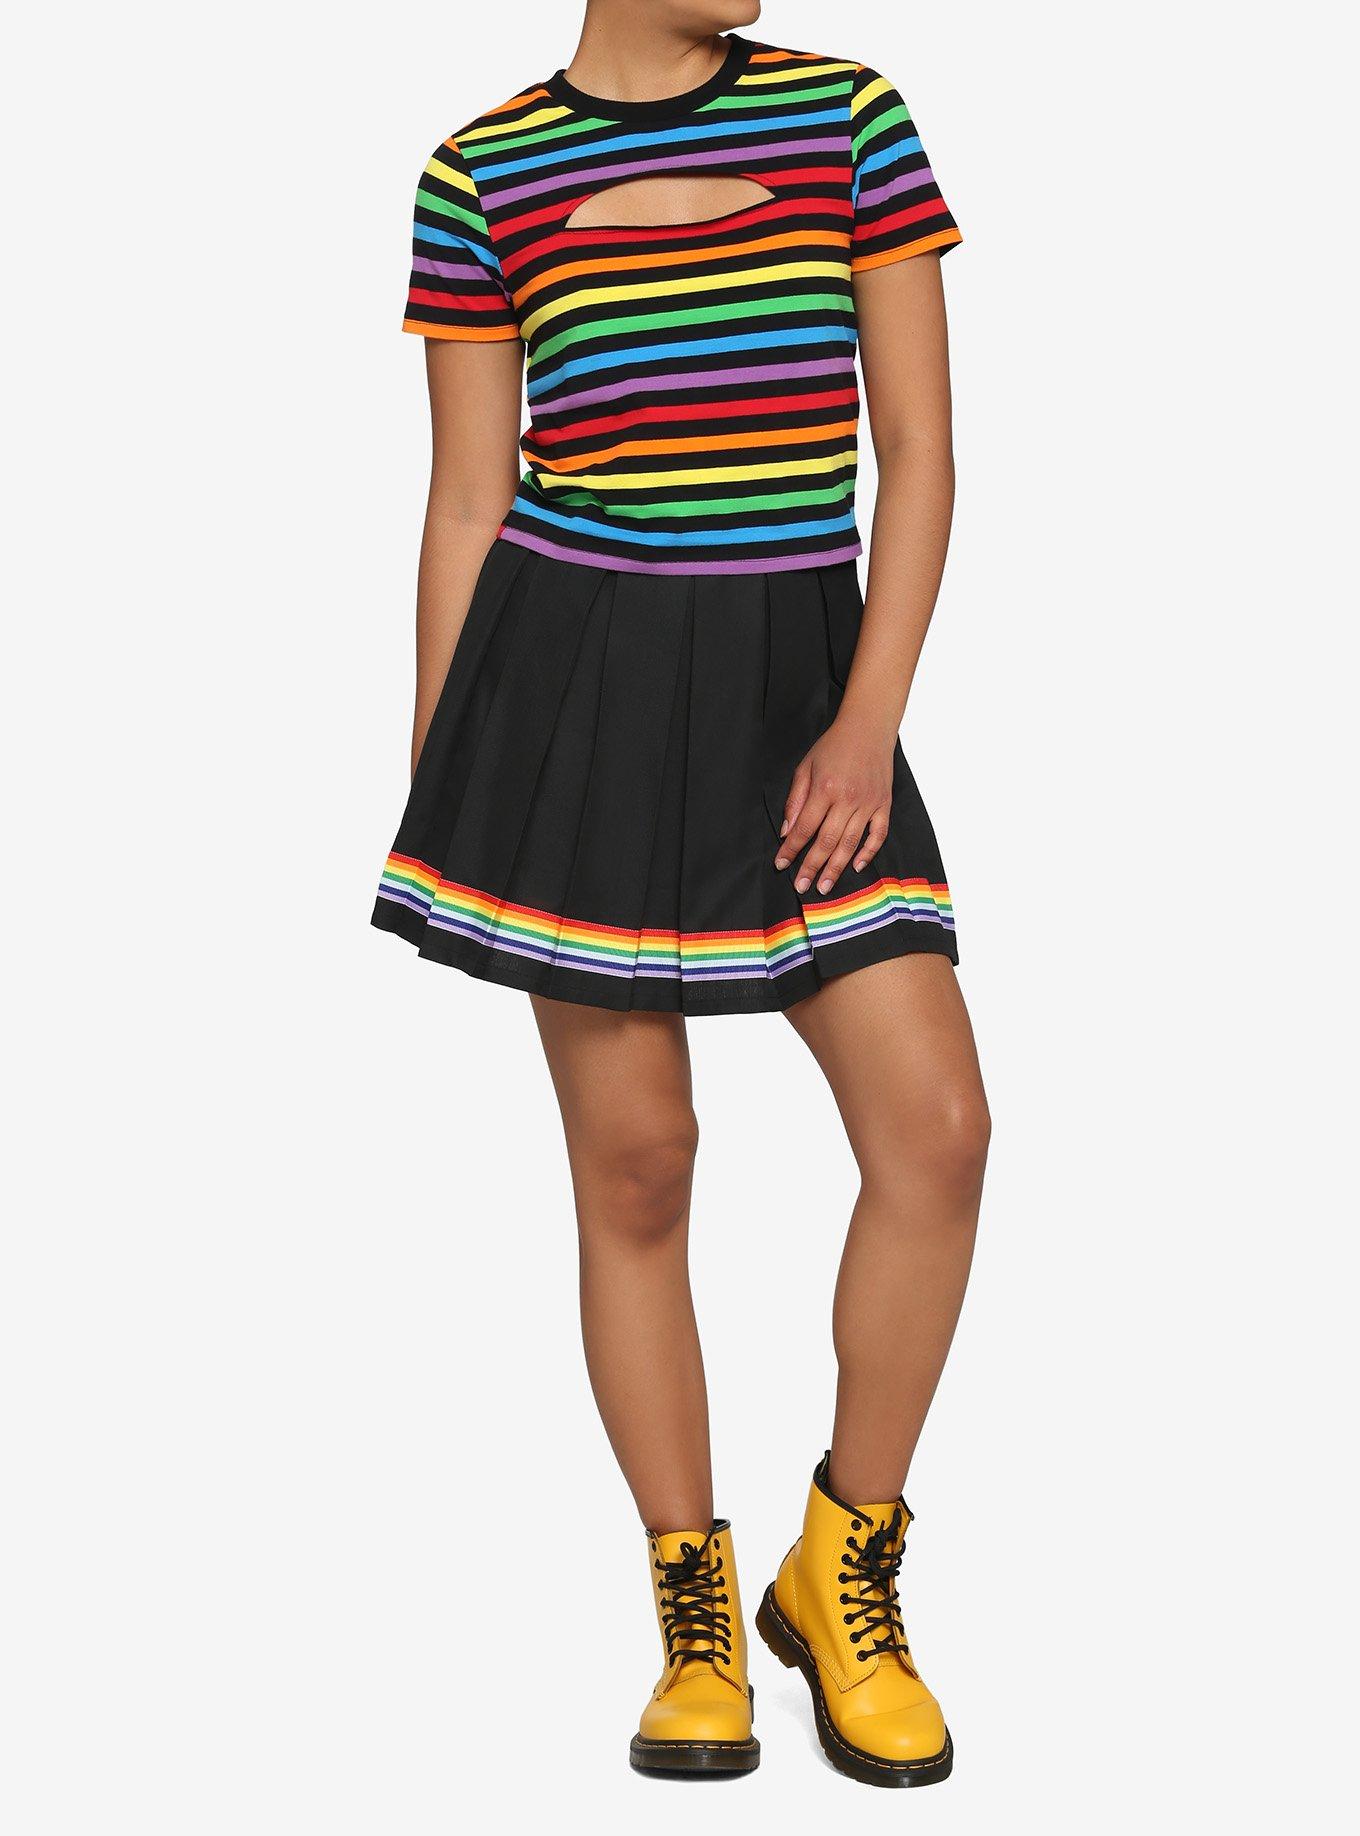 Rainbow Stripe Cutout Girls T-Shirt, STRIPES-RAINBOW, alternate